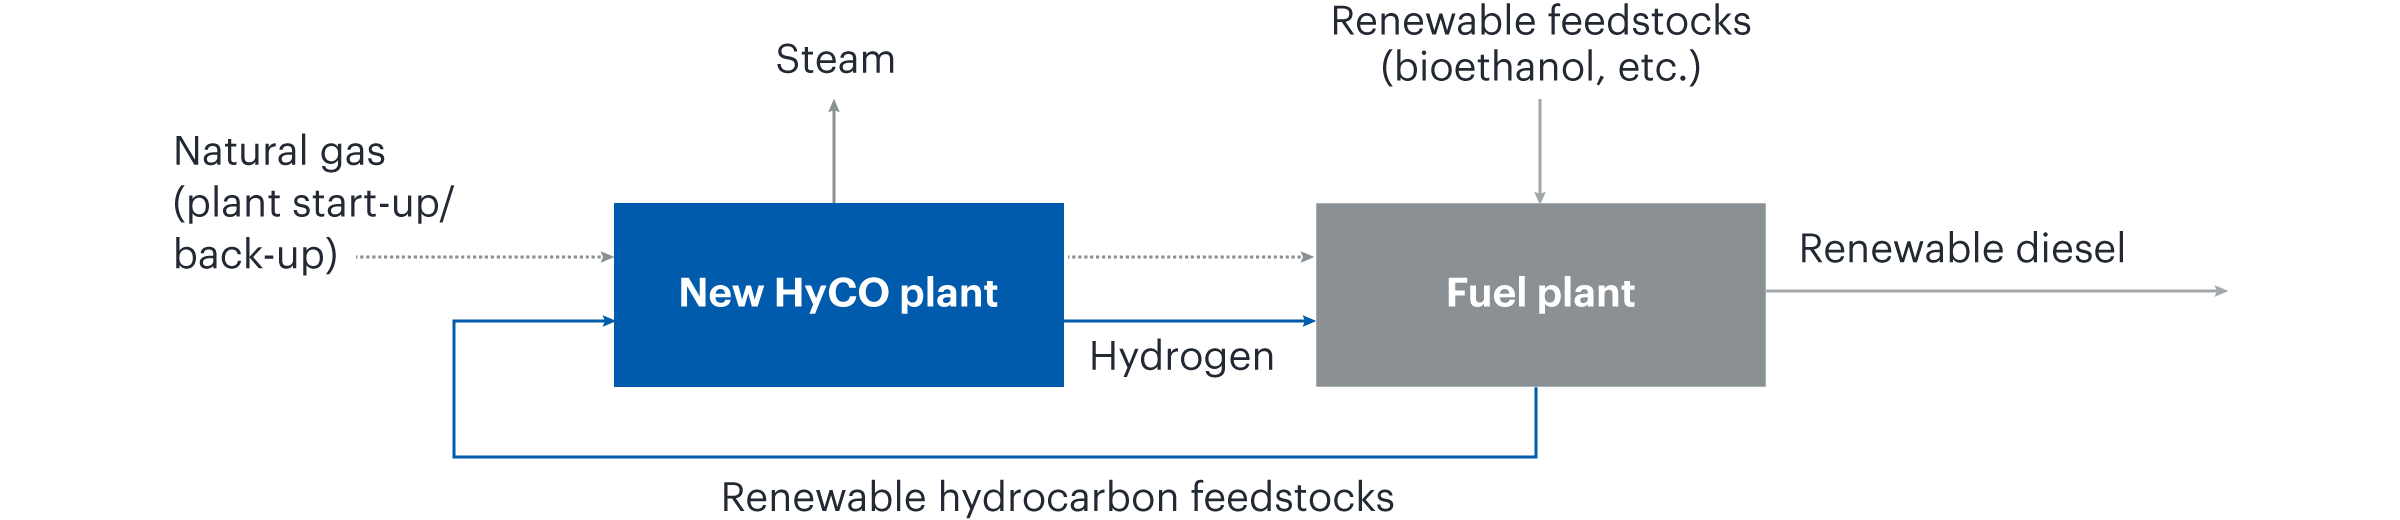 Natural gas (plant start-up/back-up) New HyCO plant Steam Hydrogen Fuel plant Renewable feedstocks (bioethanol, etc.) Renewable diesel Renewable hydrocarbon feedstocks